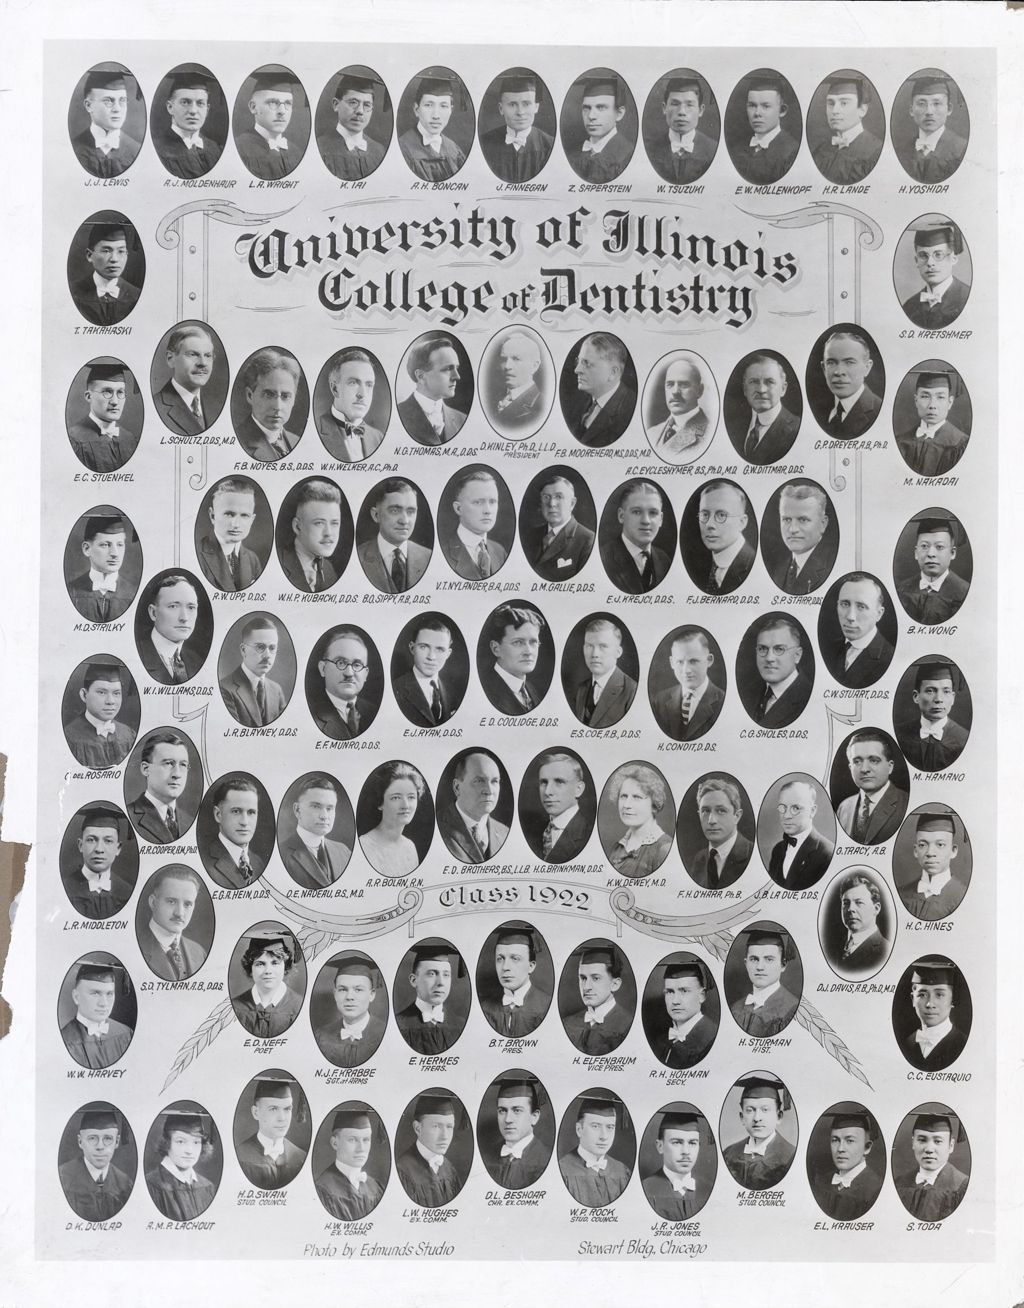 Miniature of 1922 graduating class, University of Illinois College of Dentistry